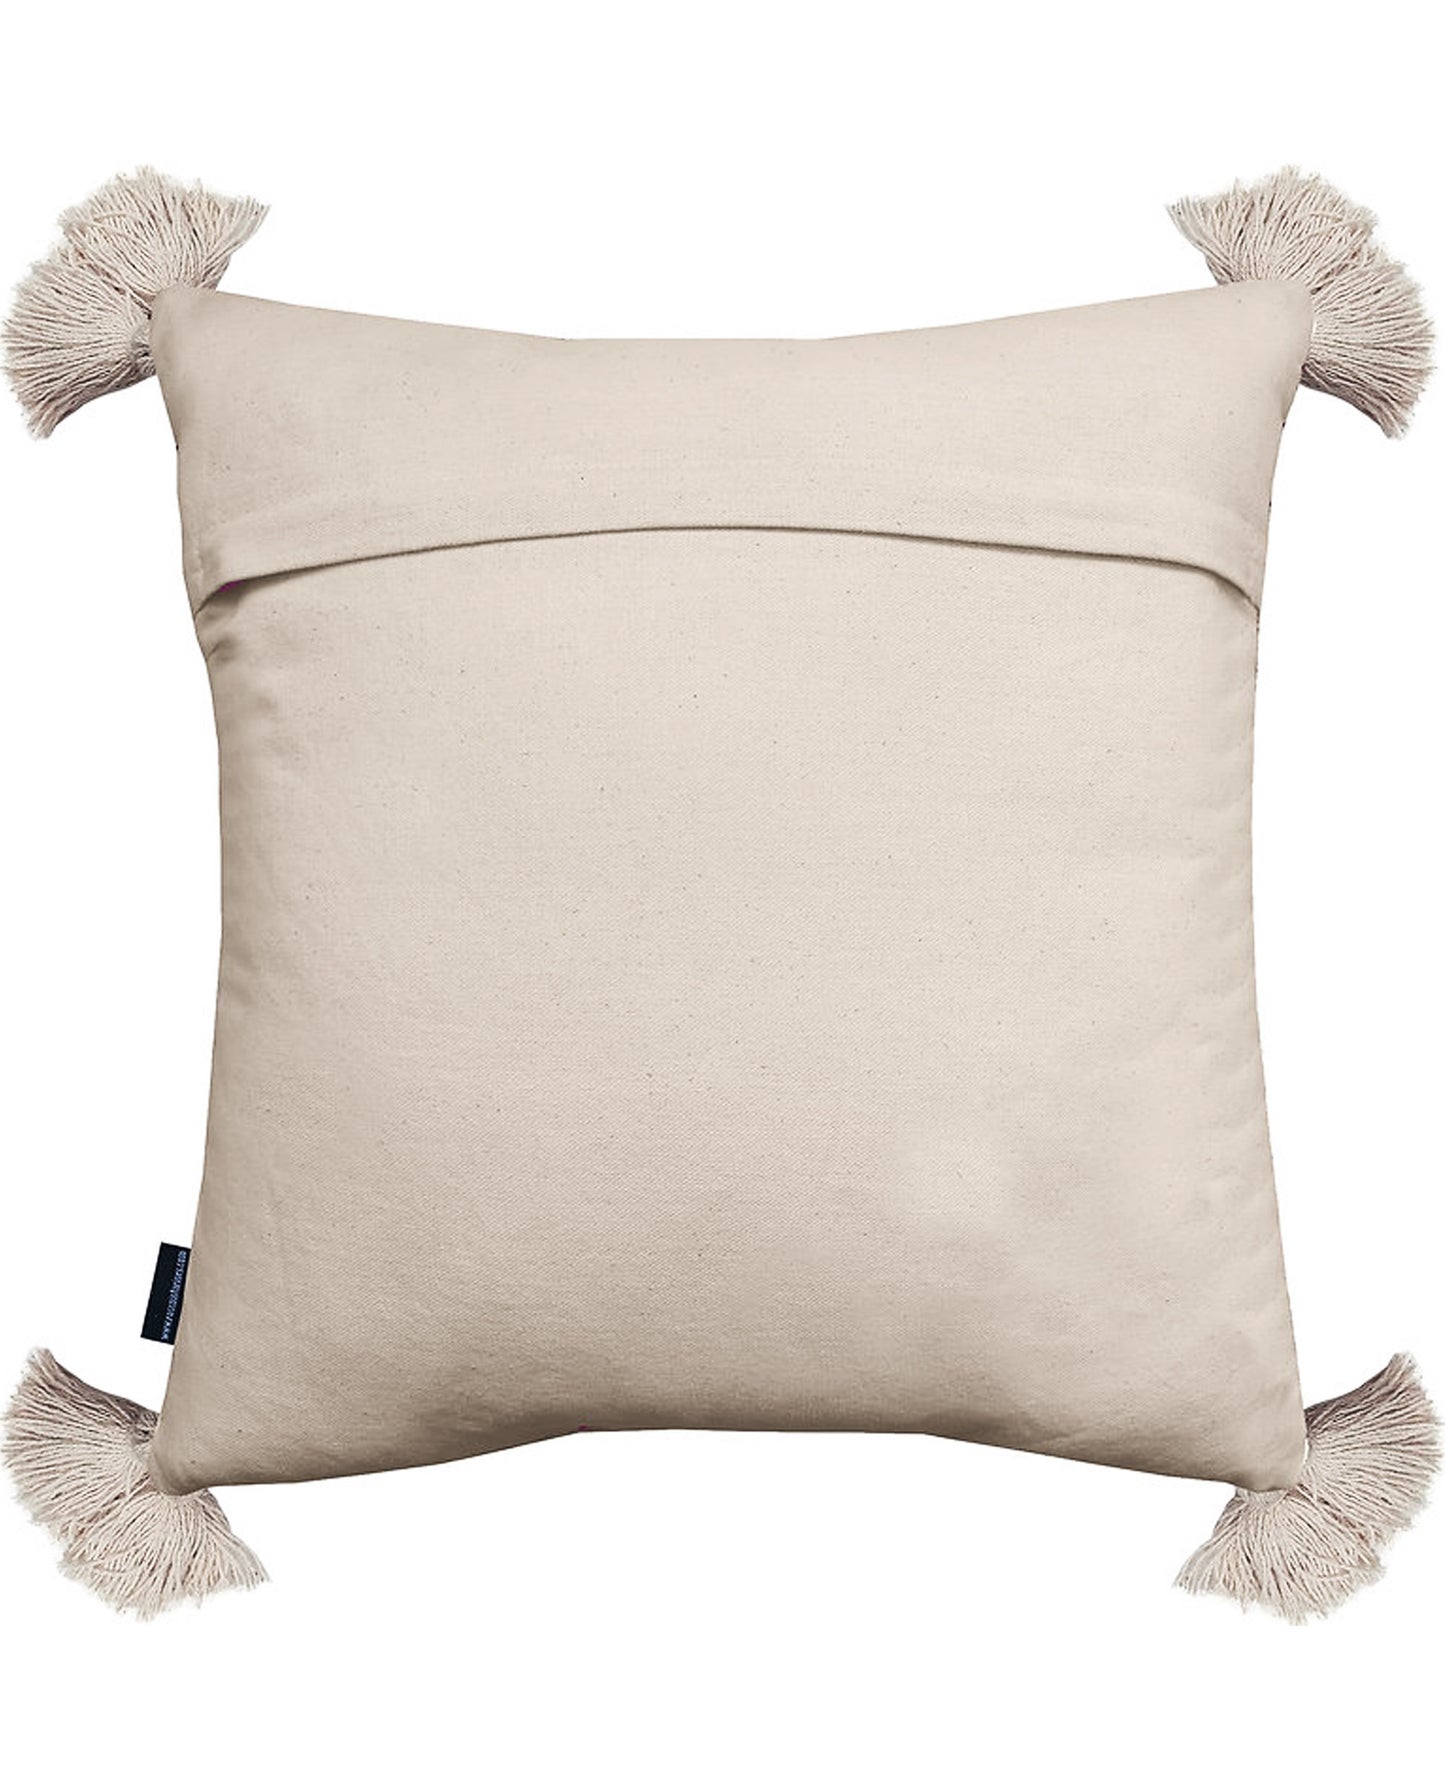 Tassled Natural Cushion